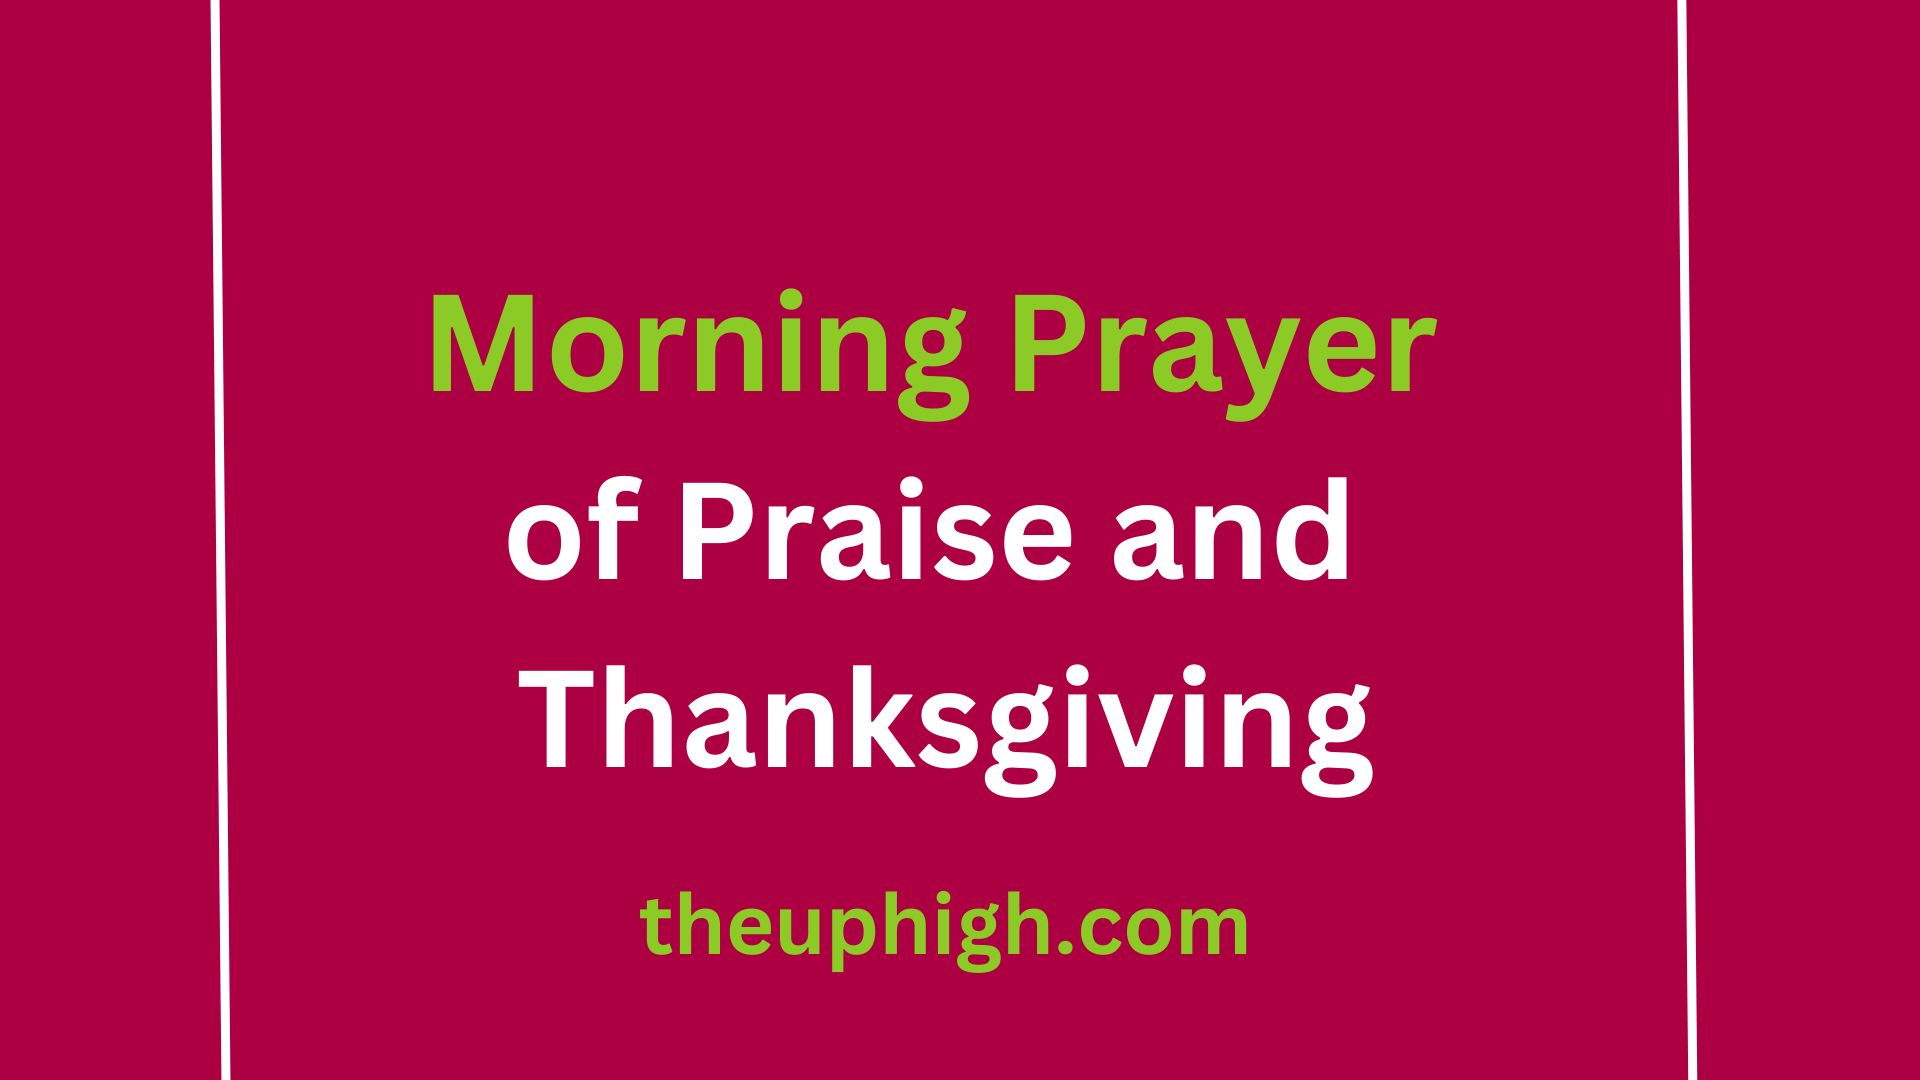 Morning Prayer of Praise and Thanksgiving